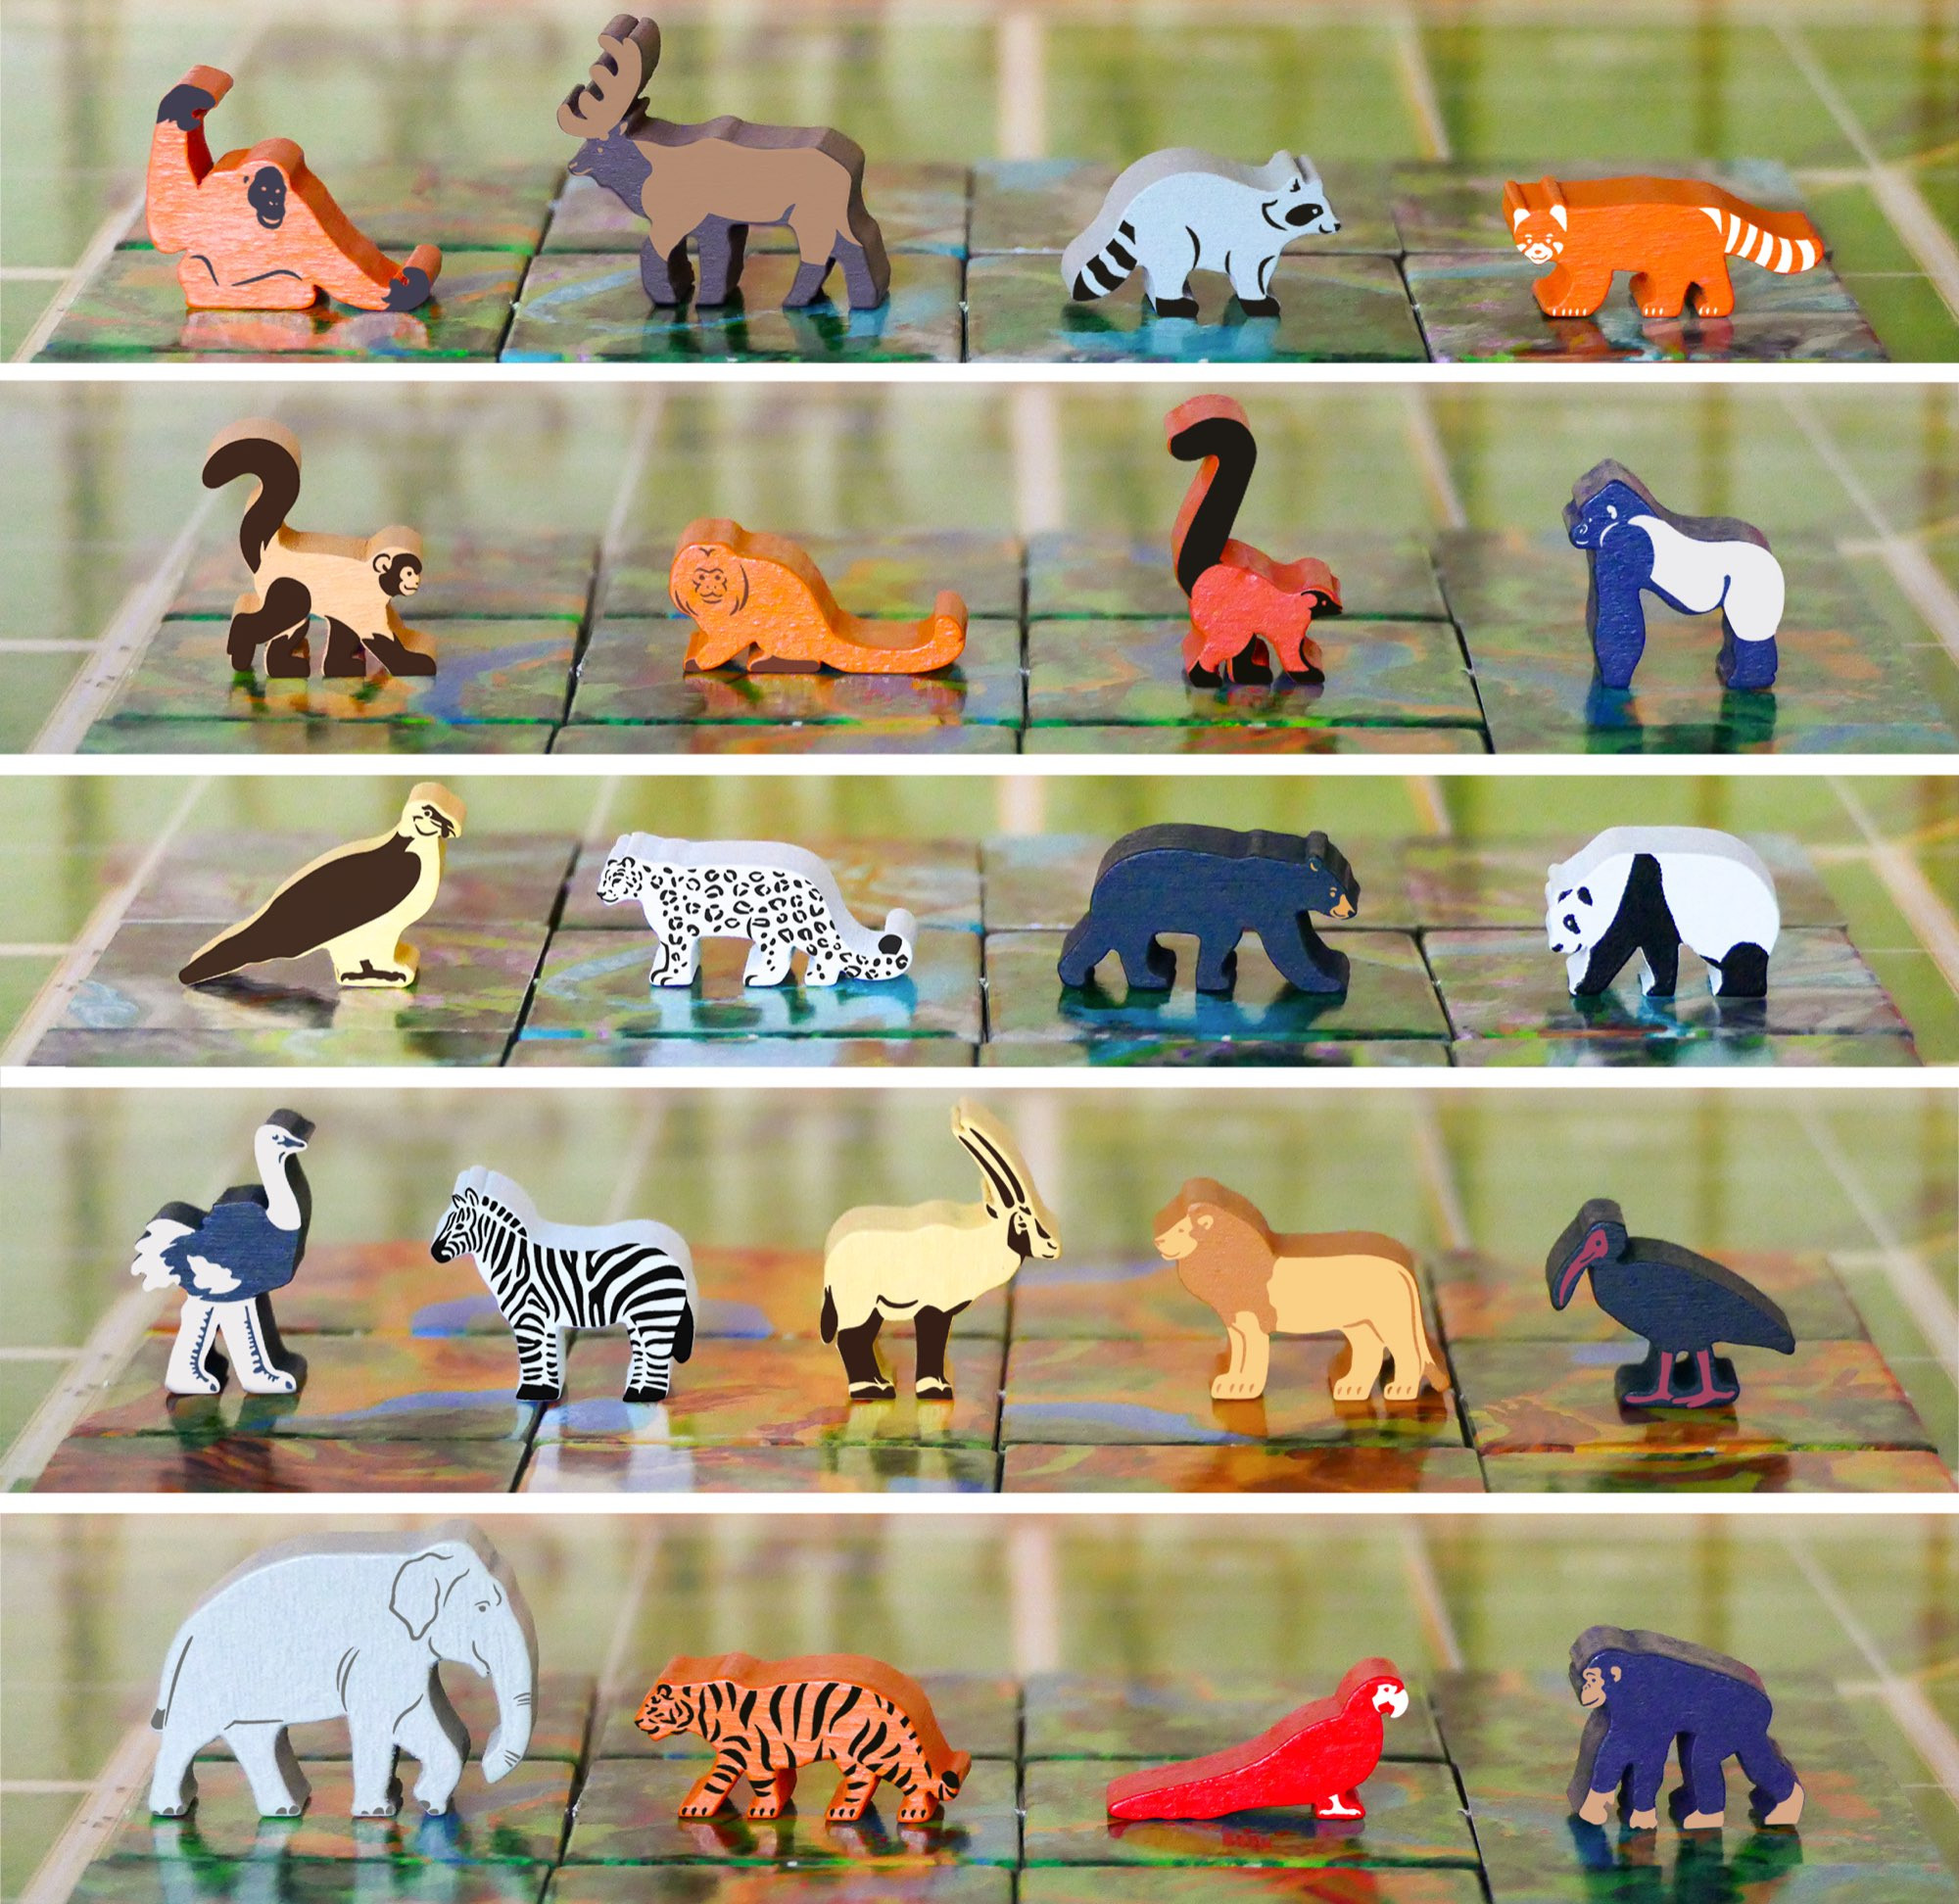 Zoo Tycoon: The Board Game #2